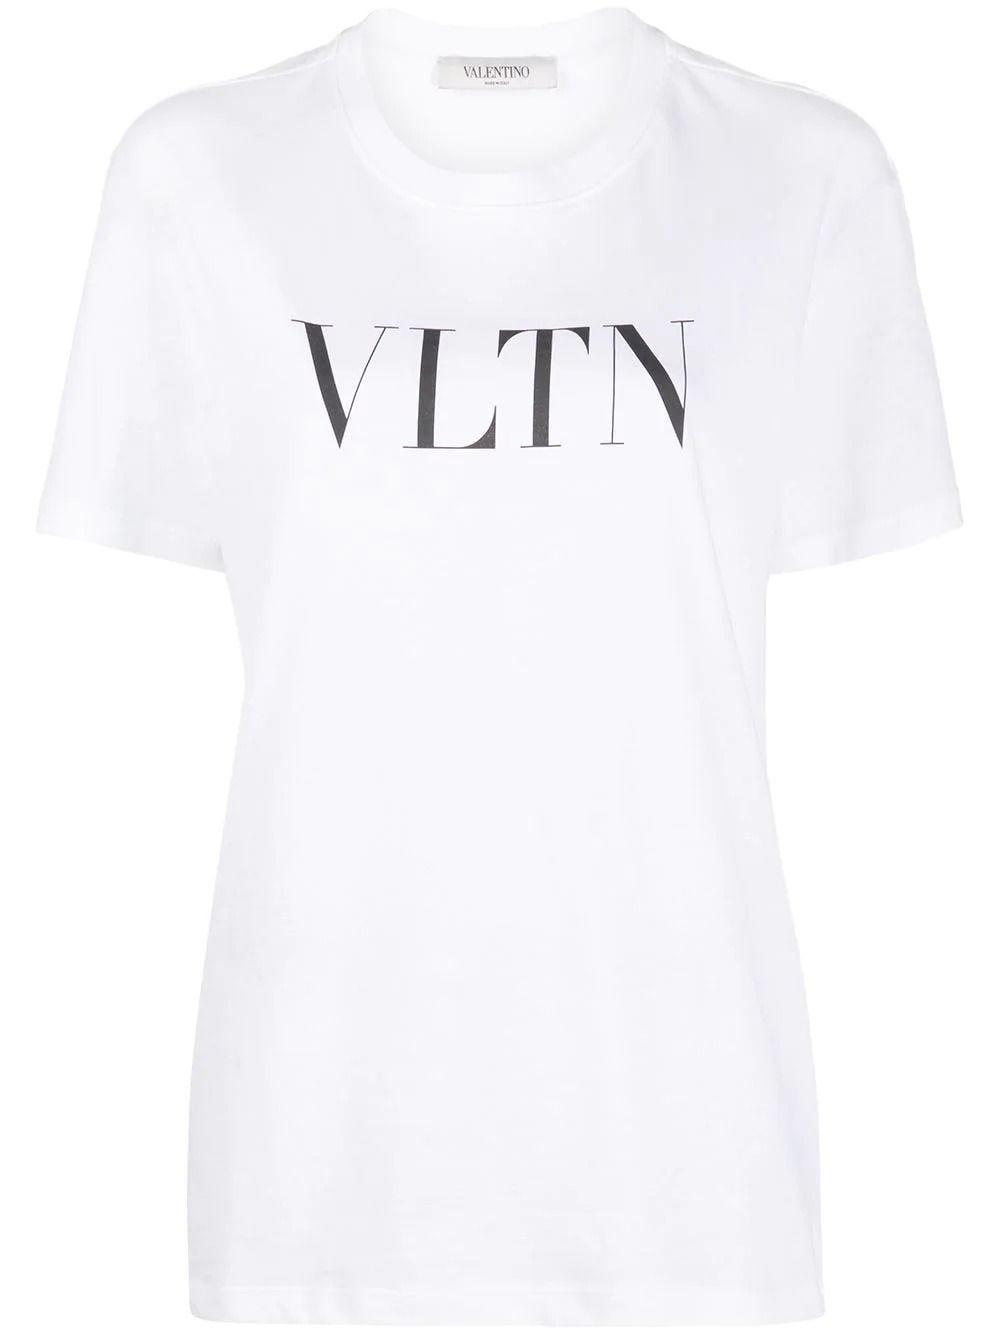 Valentino Vltn Logo T-shirt in White - Save 48% - Lyst